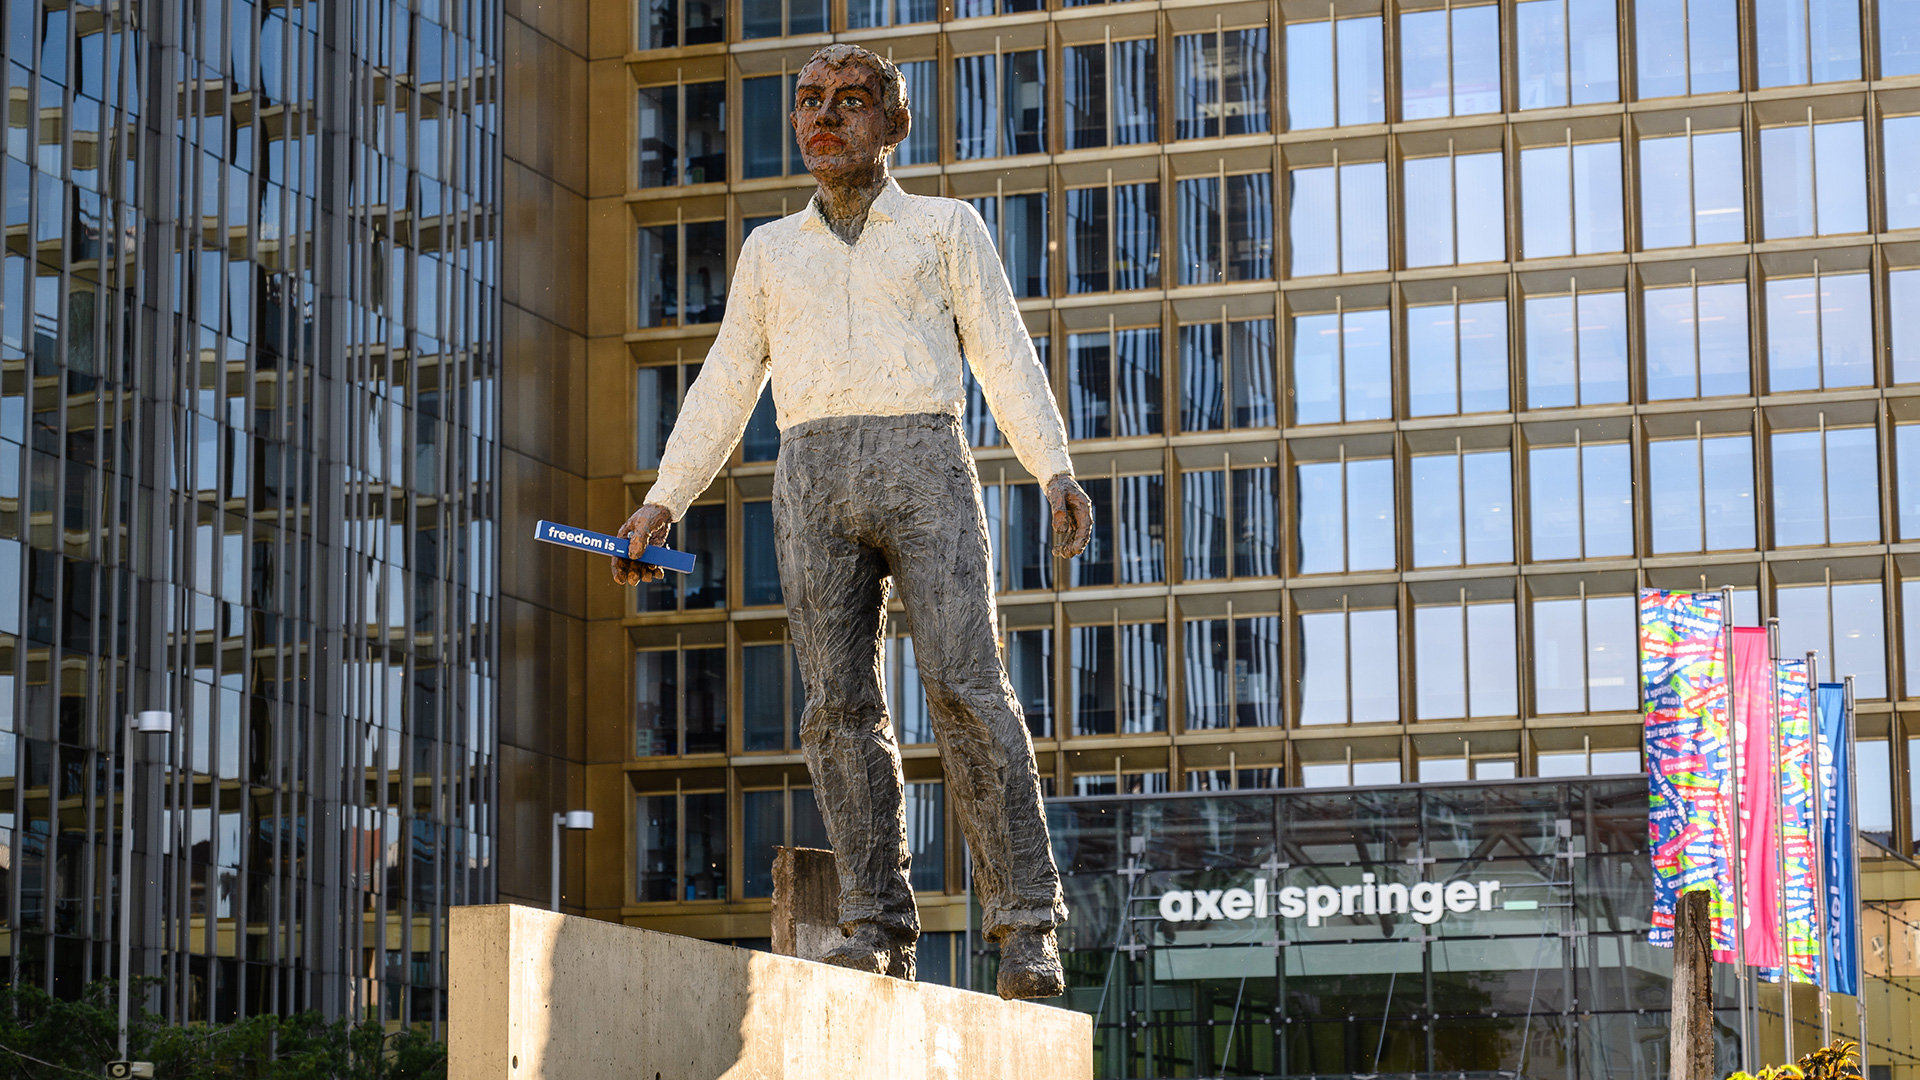 Axel Springer Statue